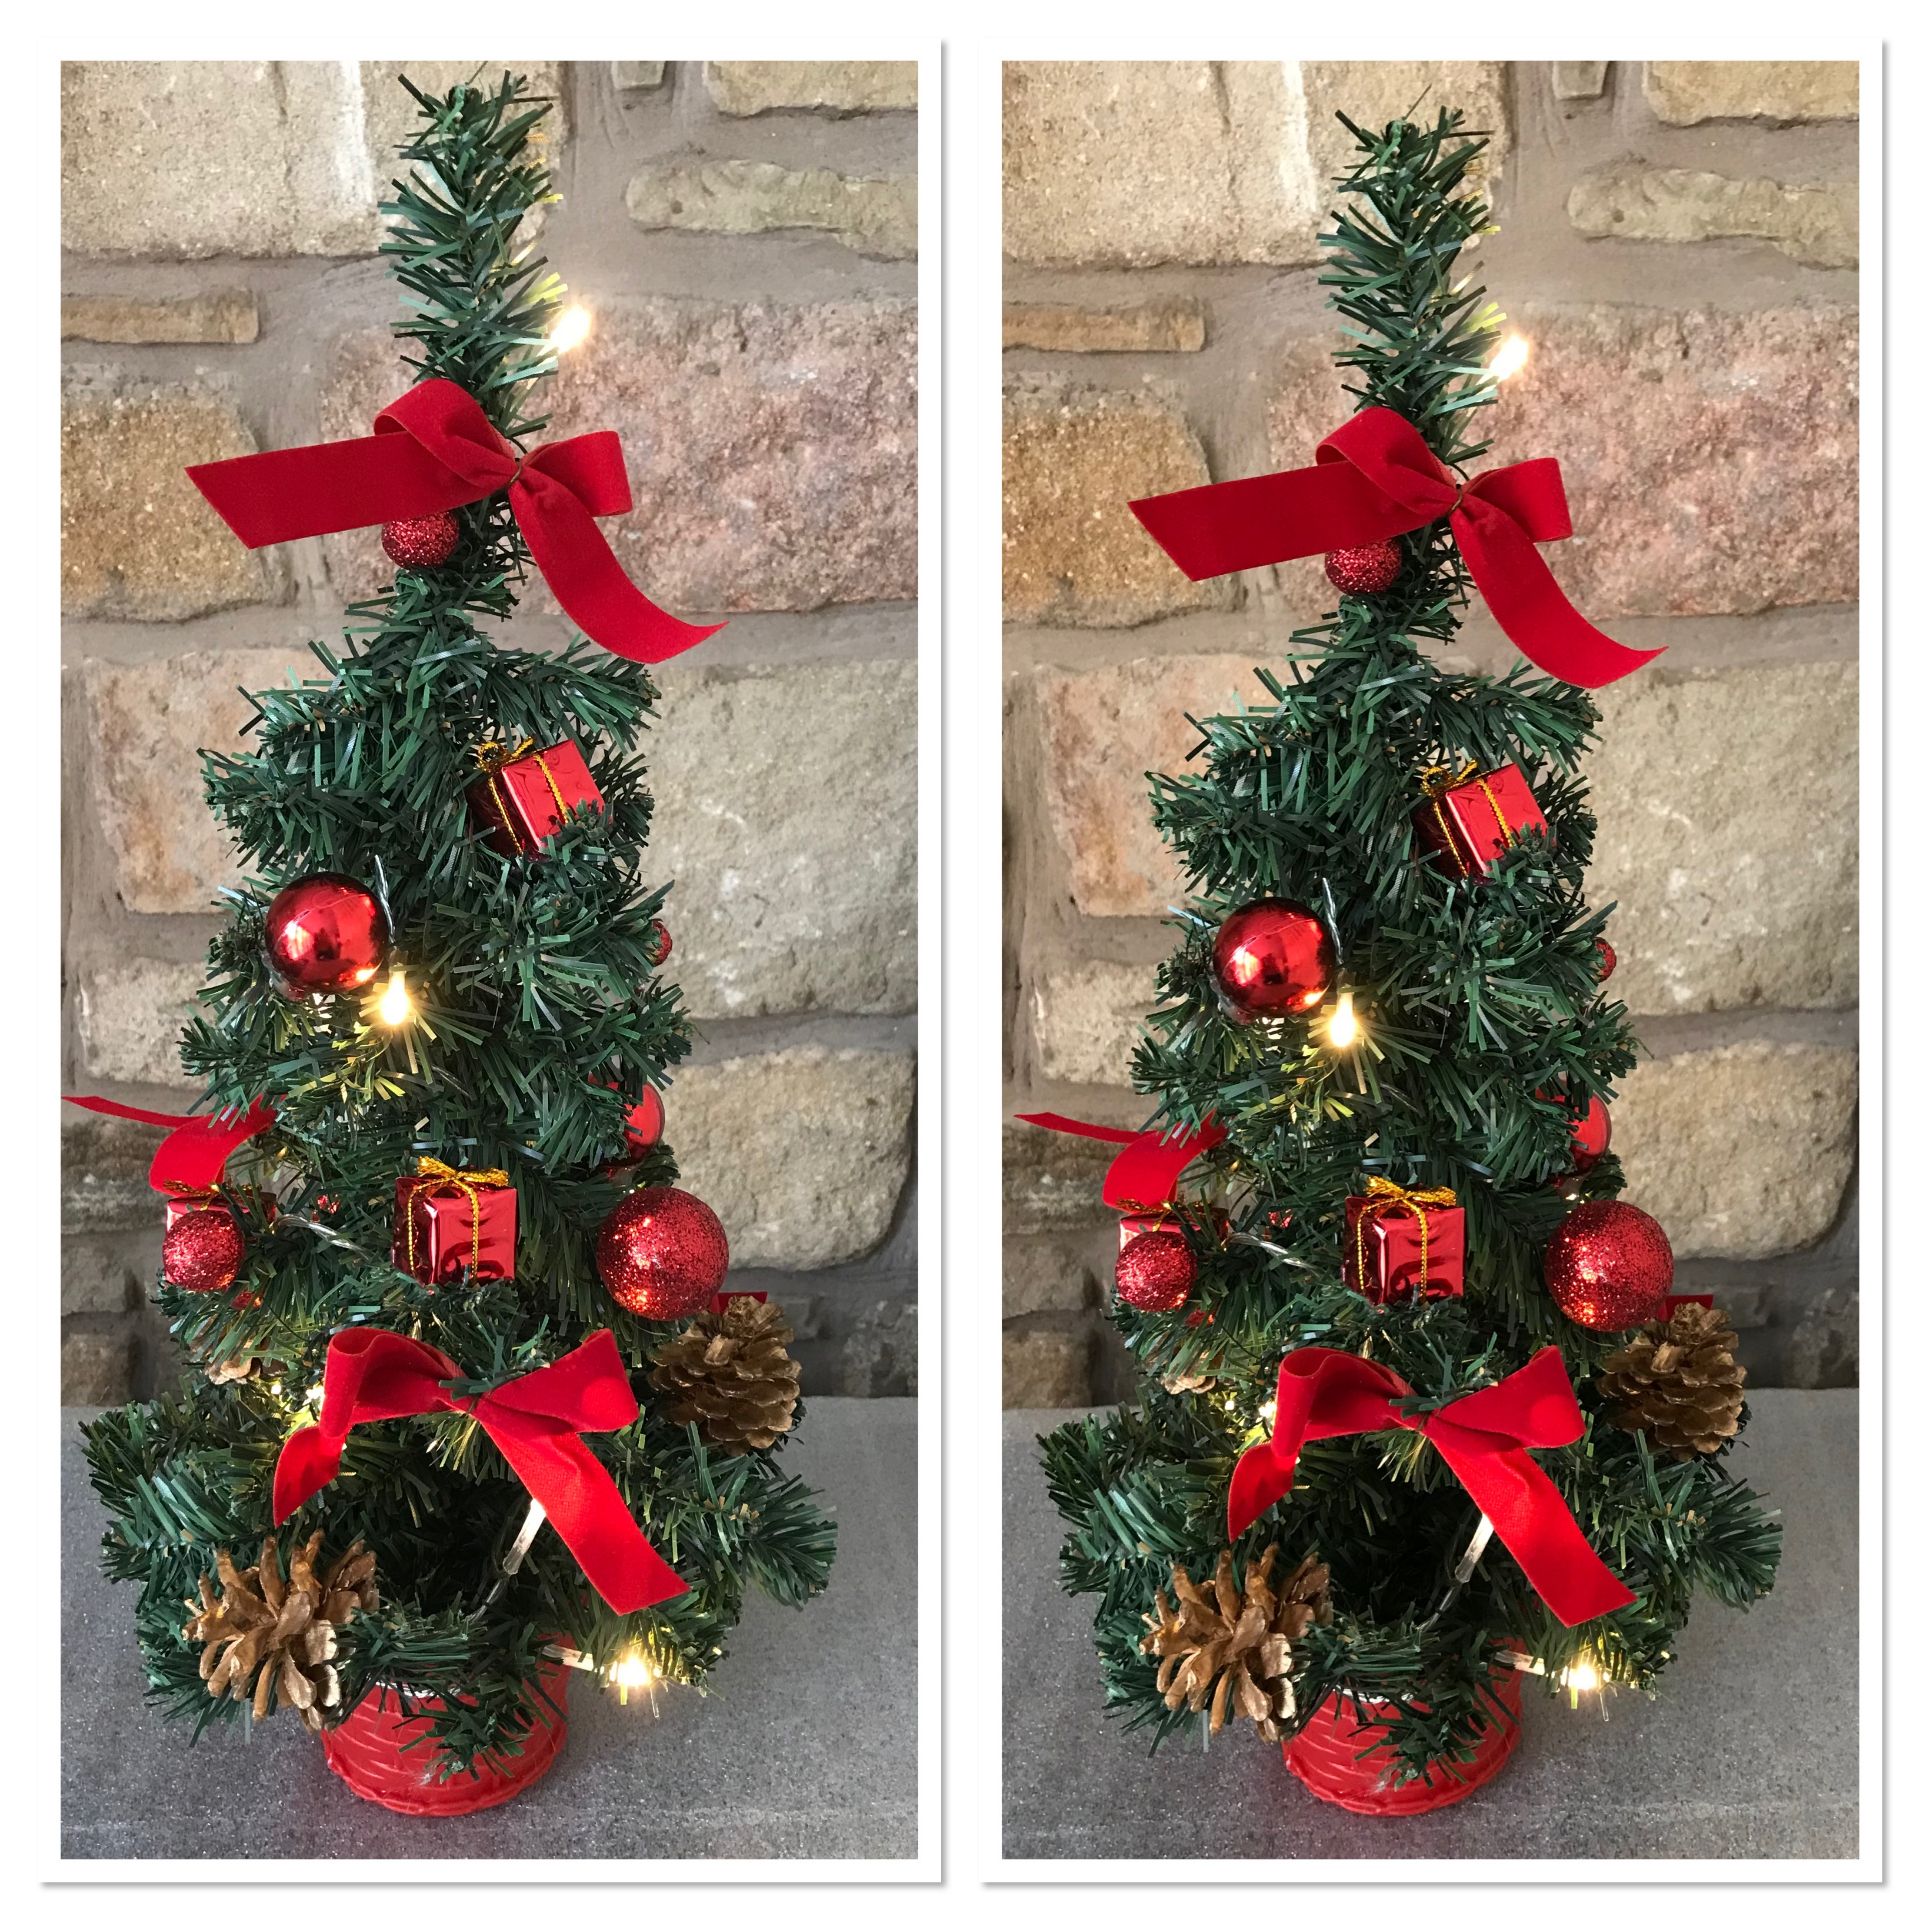 6 x Mini Christmas Trees Decorated - Image 2 of 2